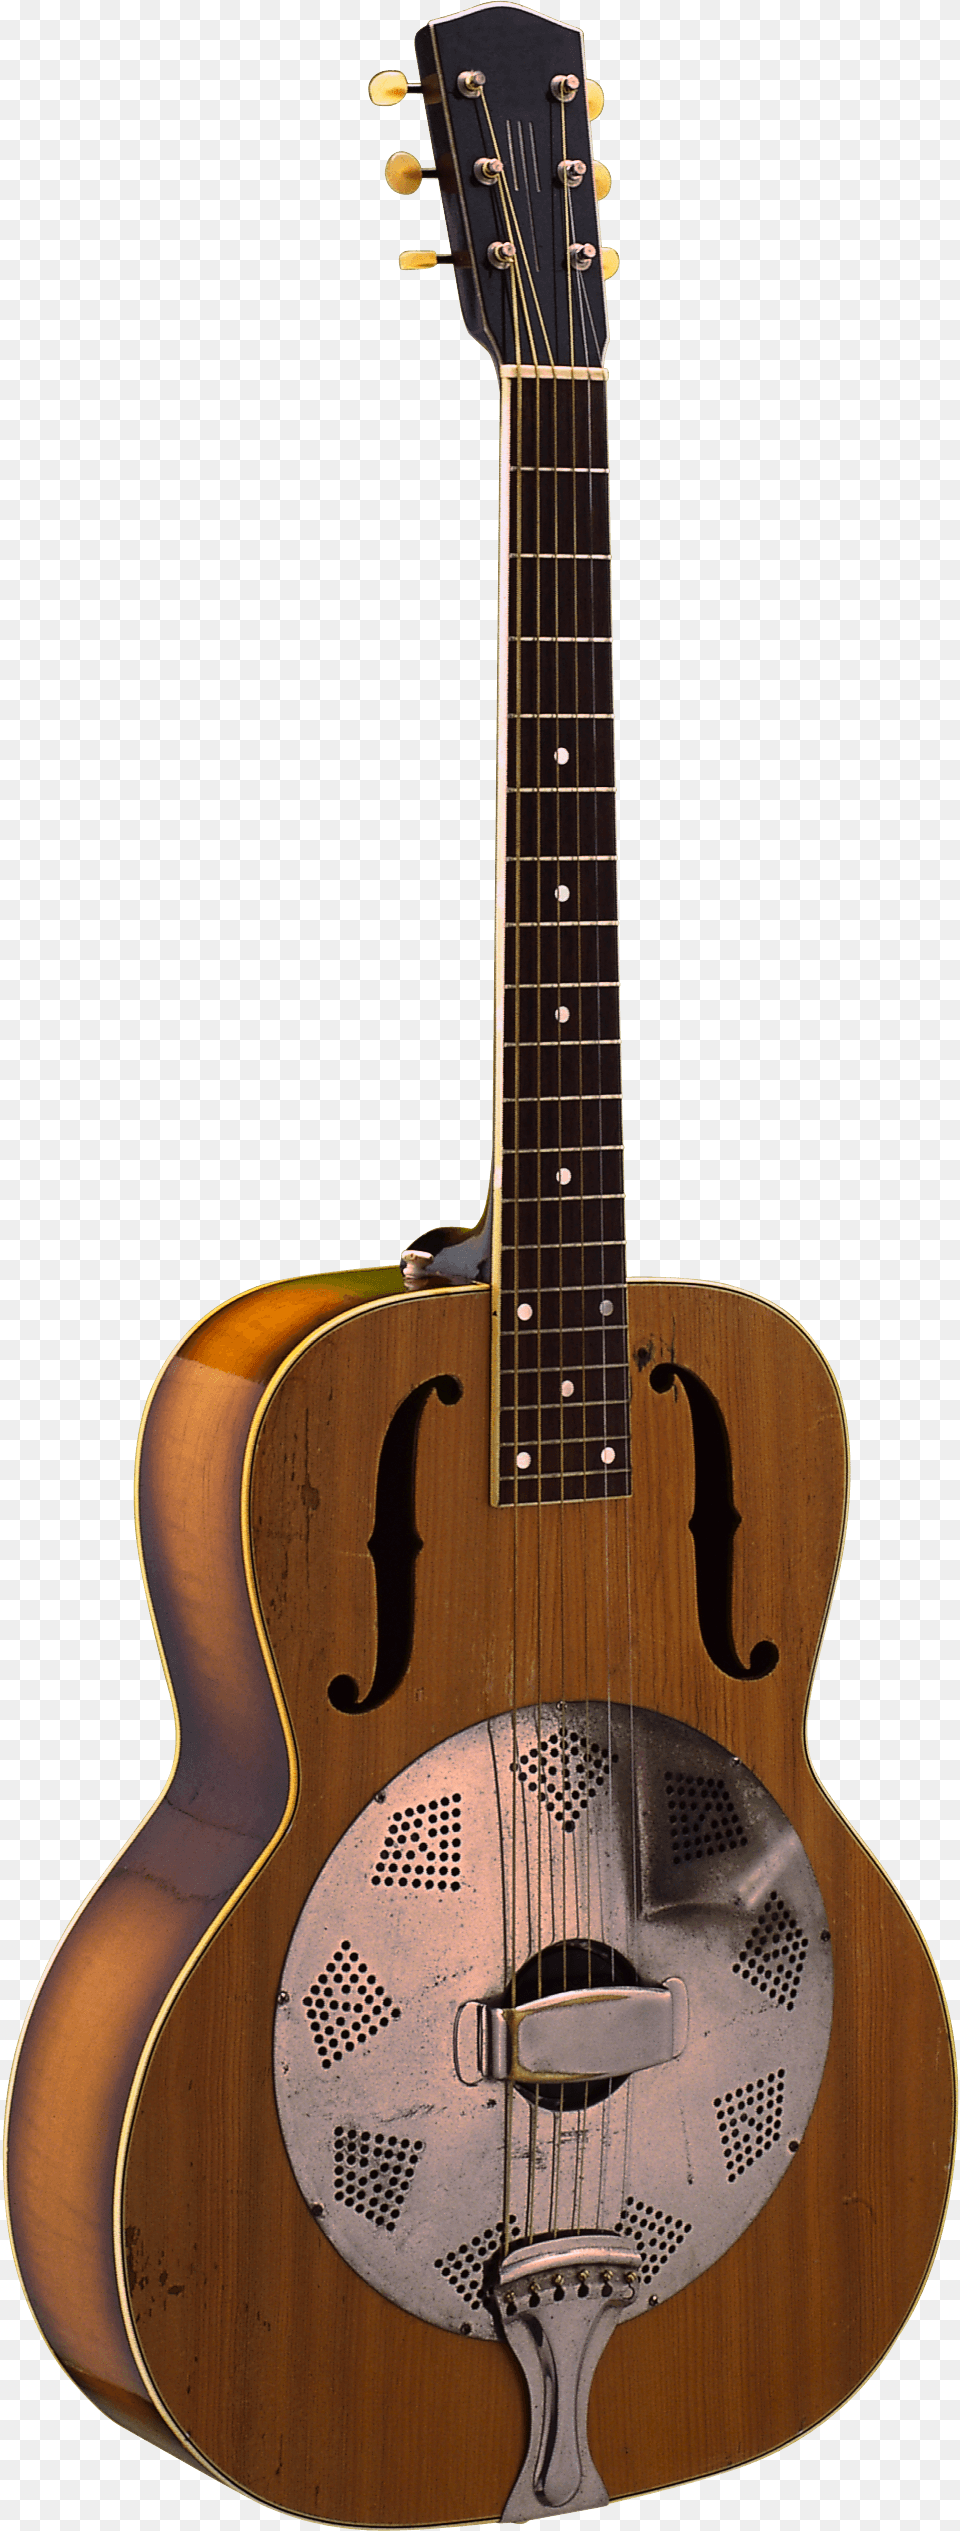 Steel Guitar, Musical Instrument, Mandolin, Lute Png Image